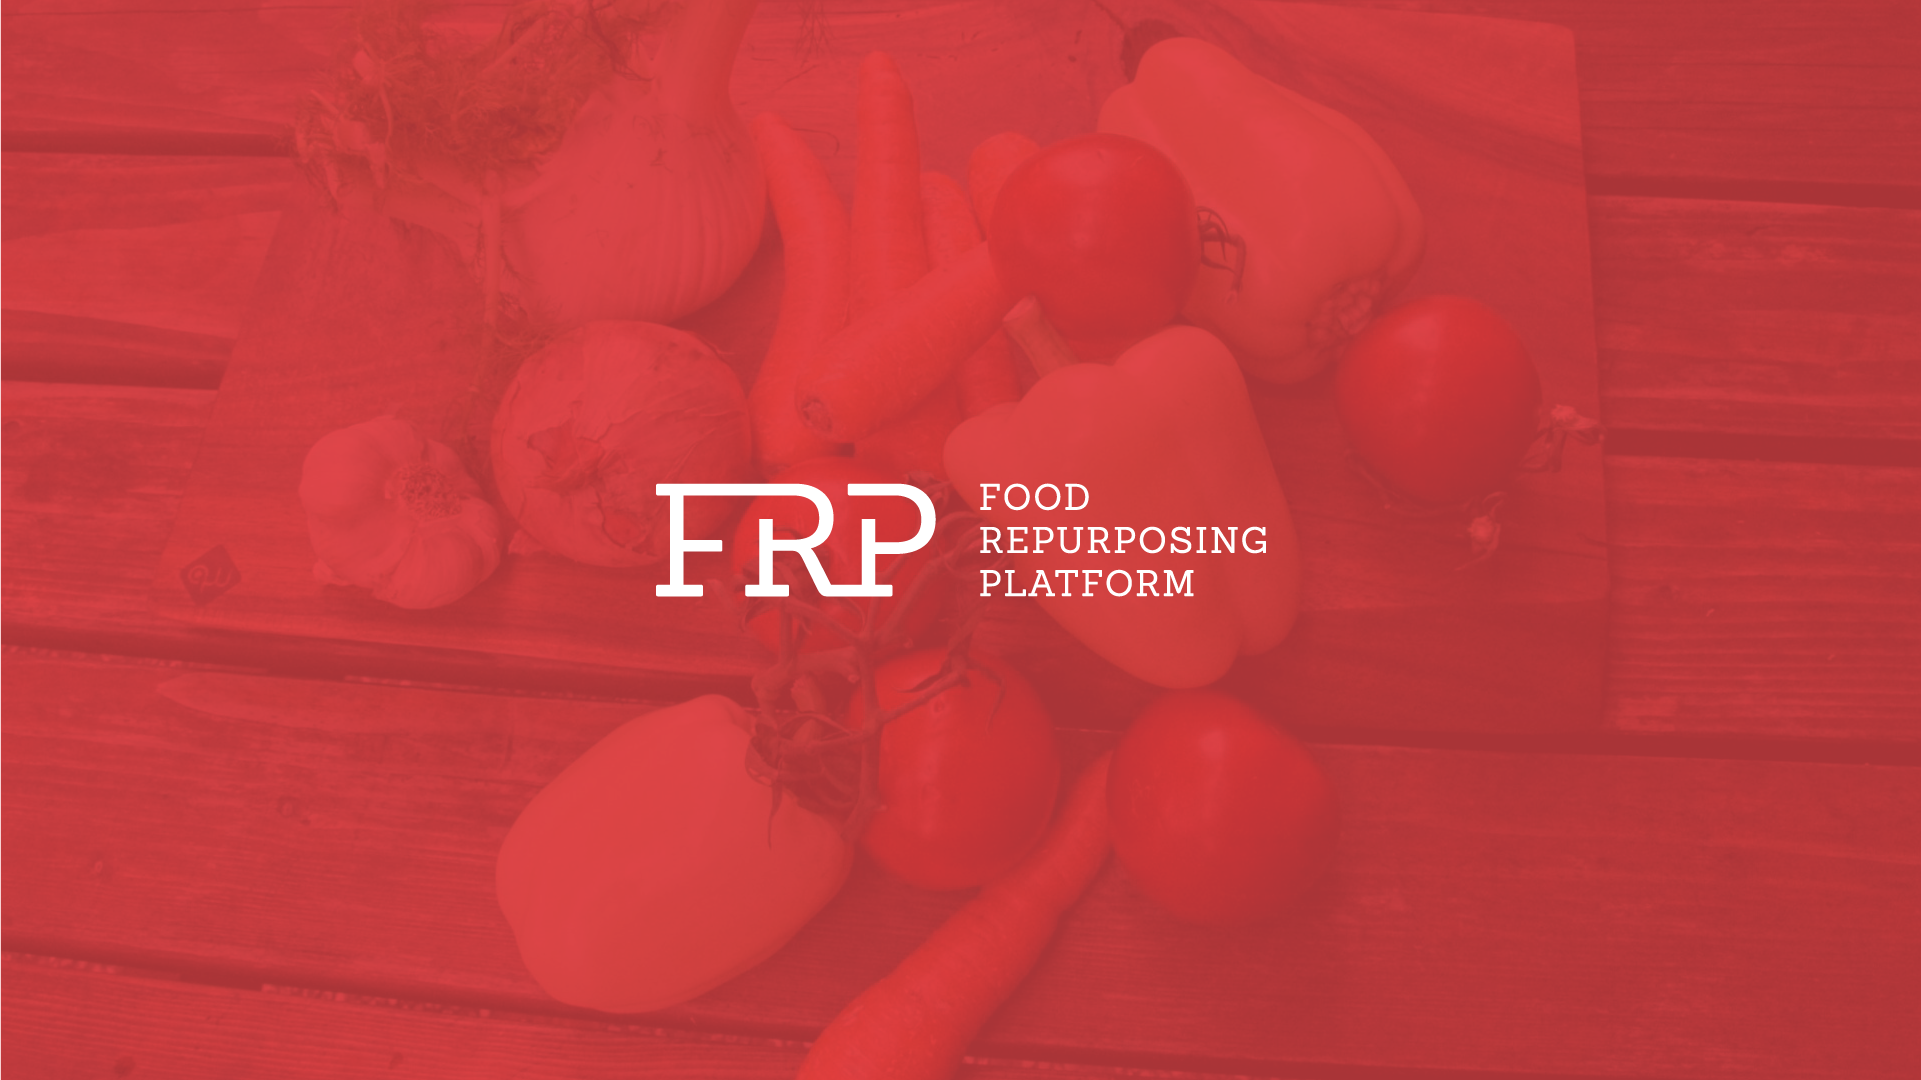 Food Repurposing Platform - branding mock up